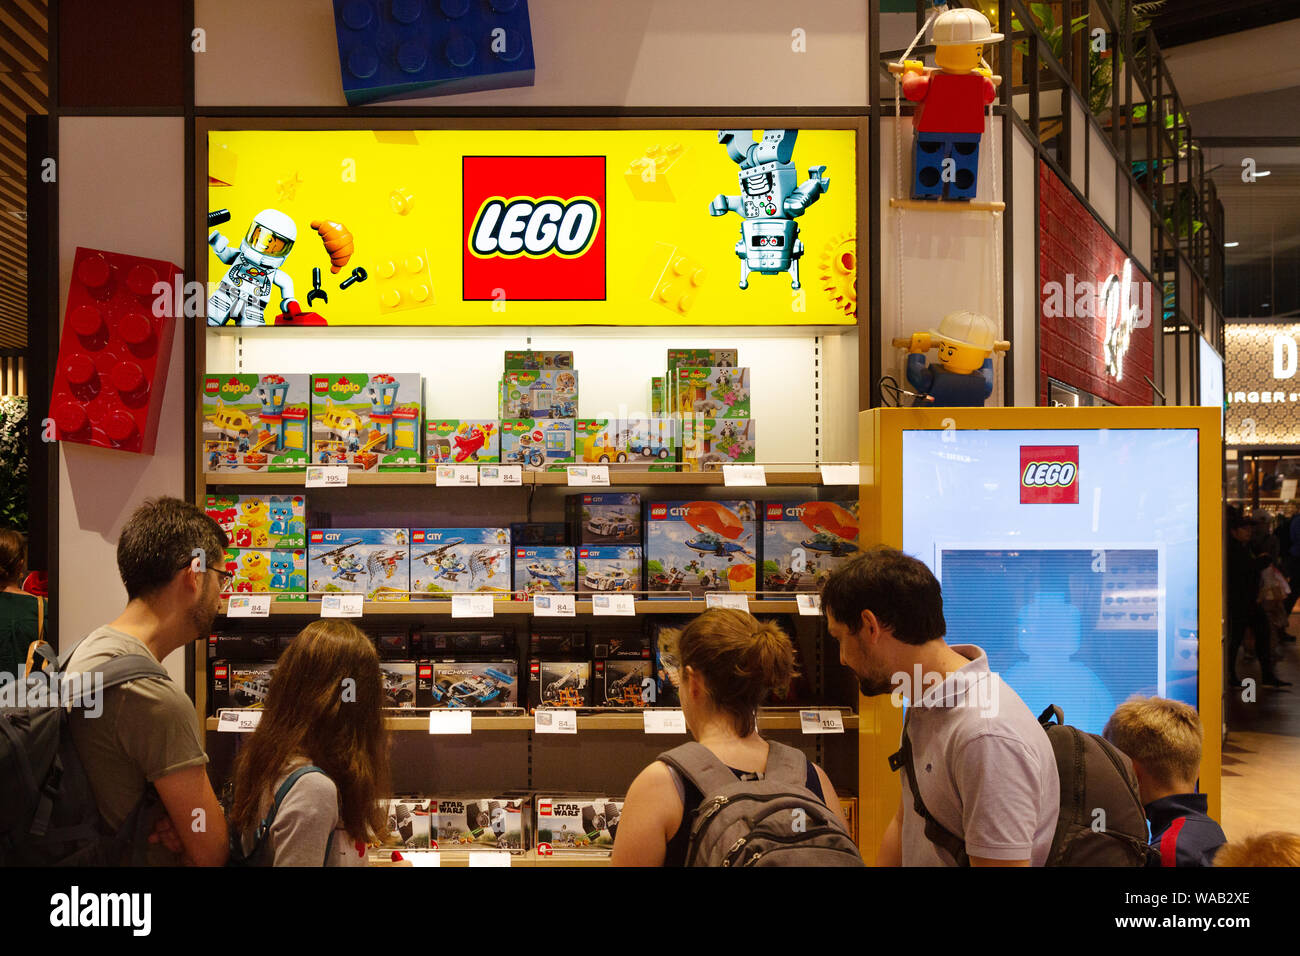 Lego Denmark - people buying lego at a lego shop, Copenhagen airport, Copenhagen, Denmark Scandinavia Stock Photo